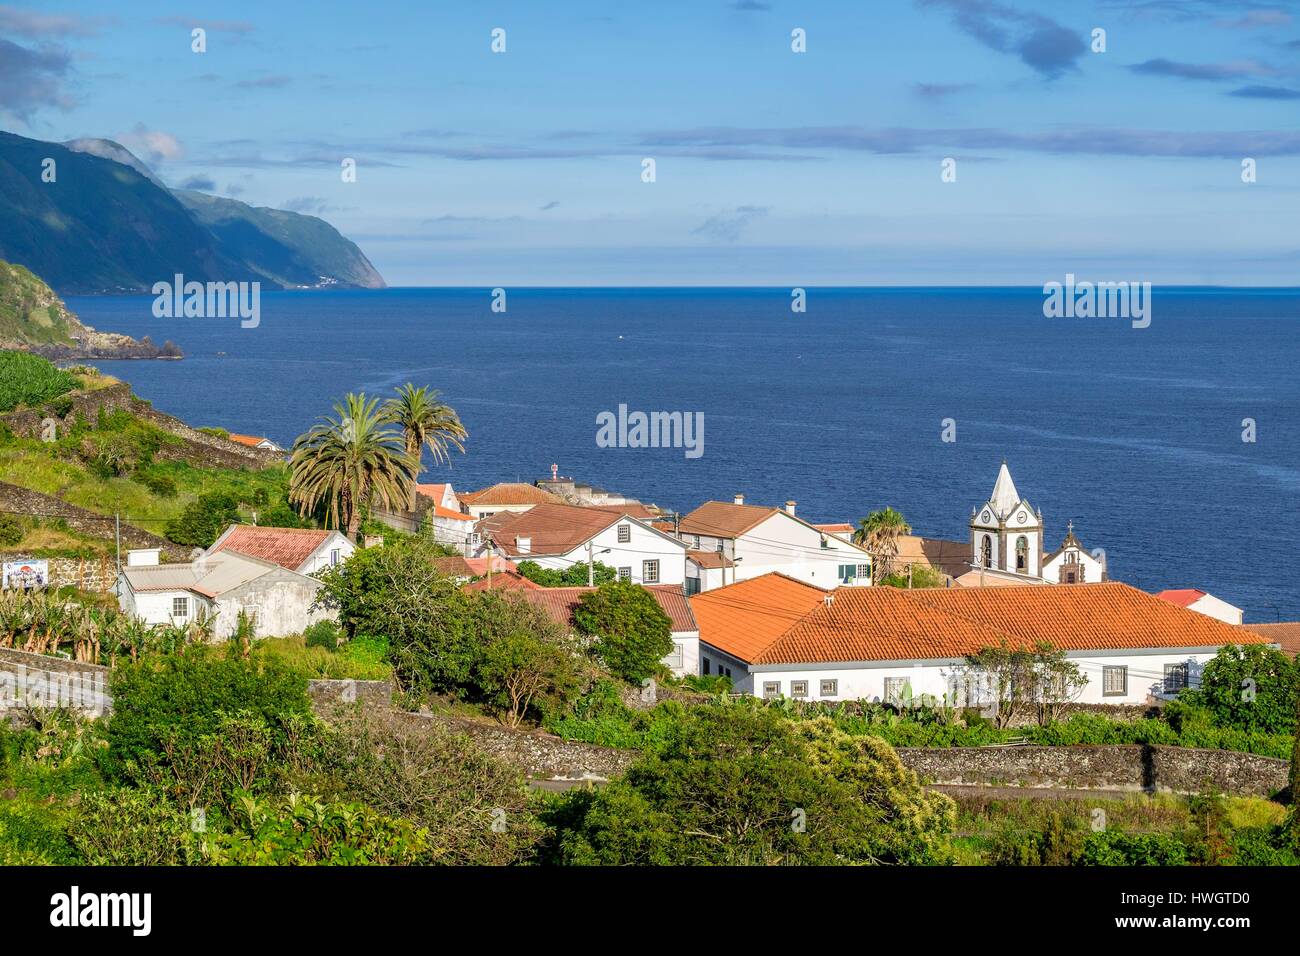 Portugal, Azores archipelago, Sao Jorge island, UNESCO Biosphere Reserve, Calheta village Stock Photo